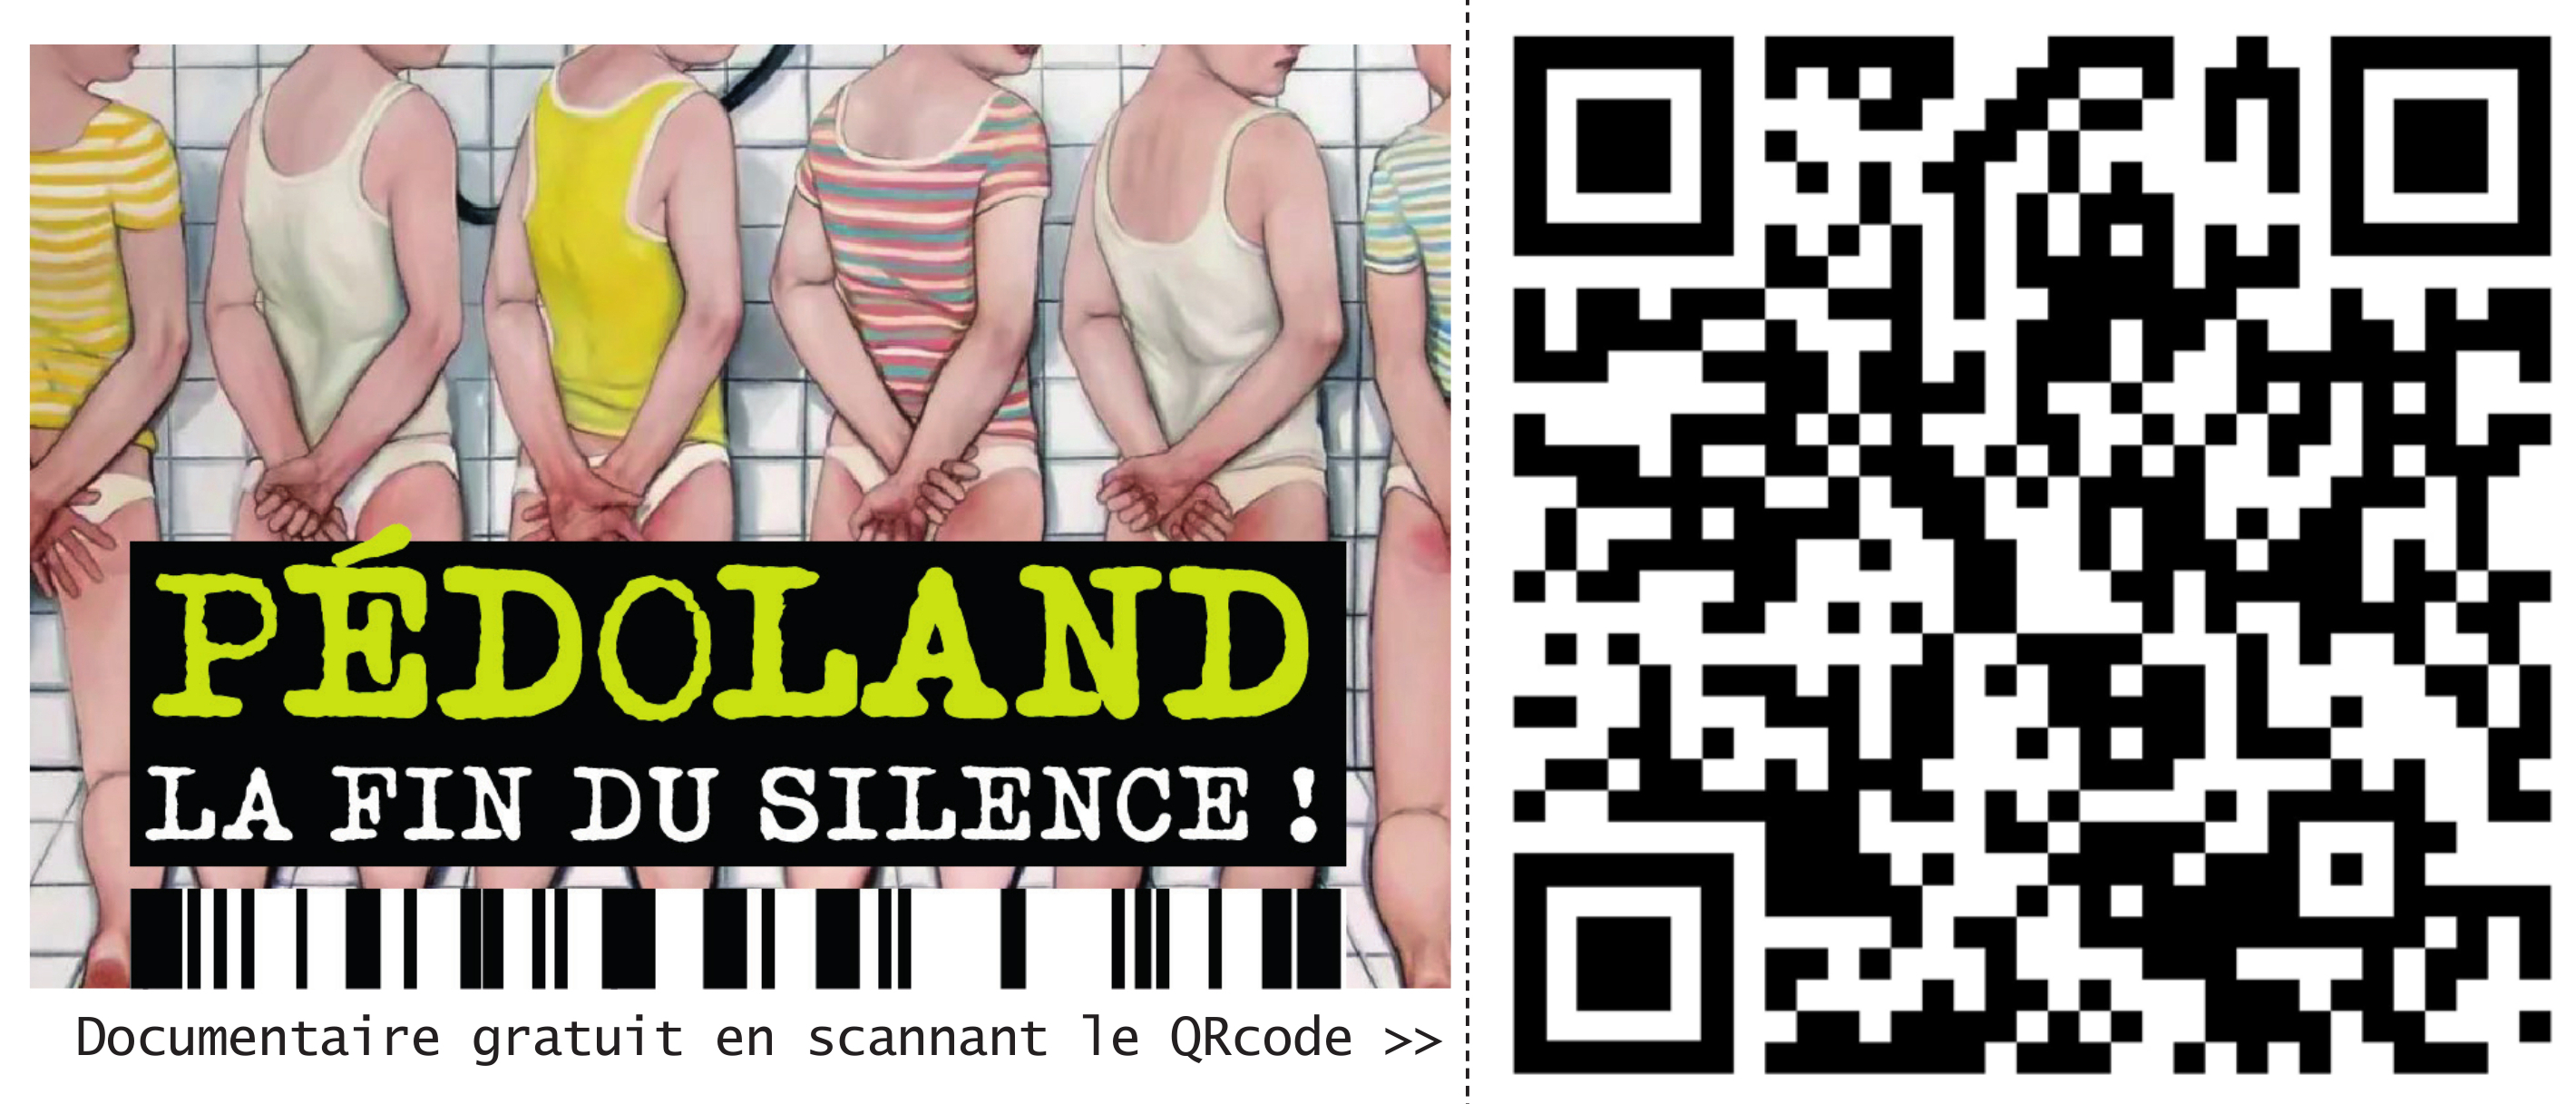 Sticker-pedoland-la-fin-du-silence